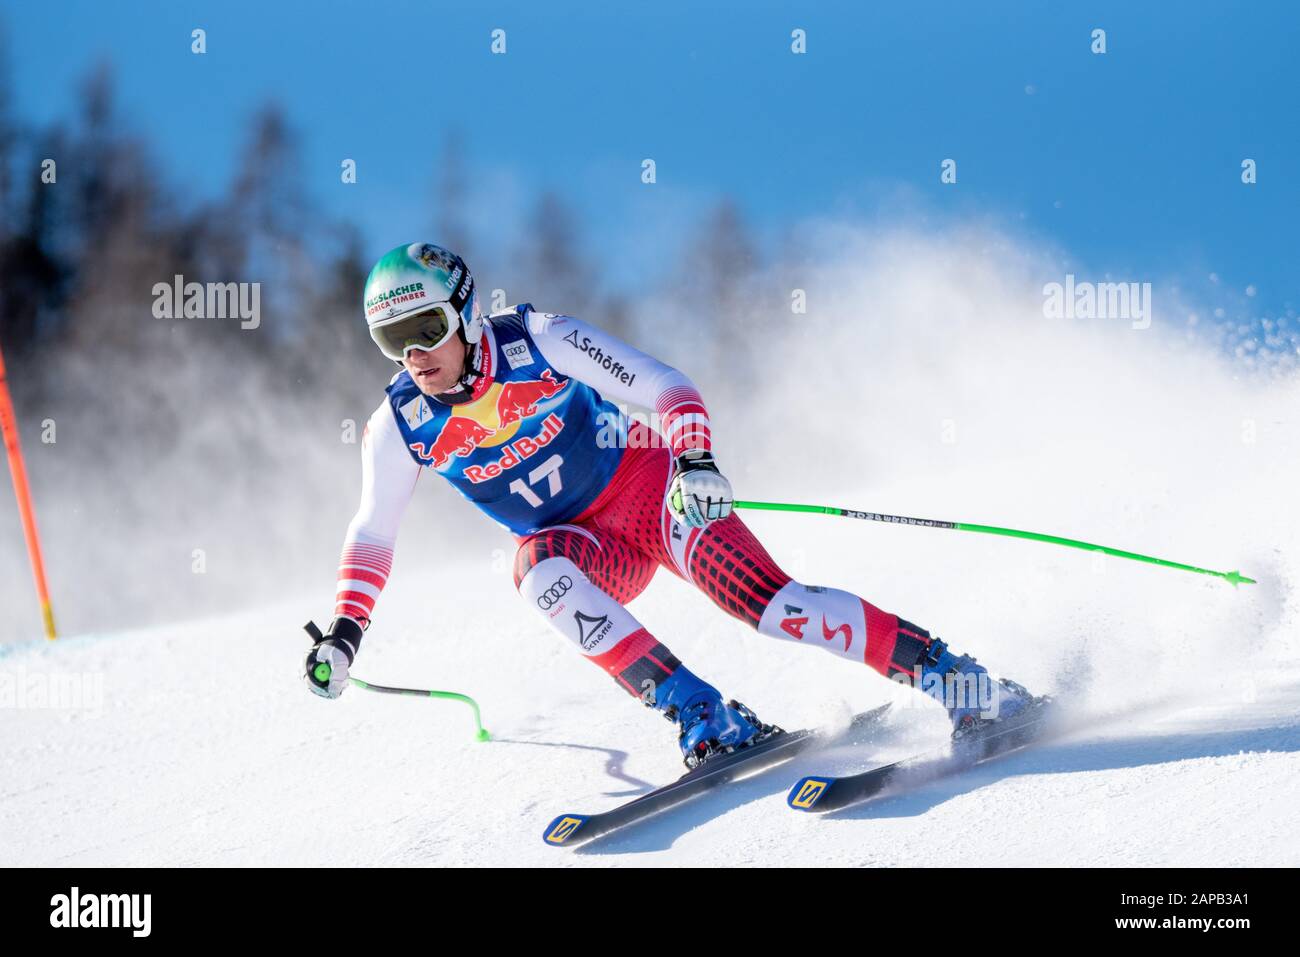 Otmar Striedinger of Austria at the Ski Alpin: 80. Hahnenkamm Race 2020 - Audi FIS Alpine Ski World Cup - Men's Downhill Training at the Streif on January 22, 2020 in Kitzbuehel, AUSTRIA. (Photo by Horst Ettensberger/ESPA-Images) Stock Photo